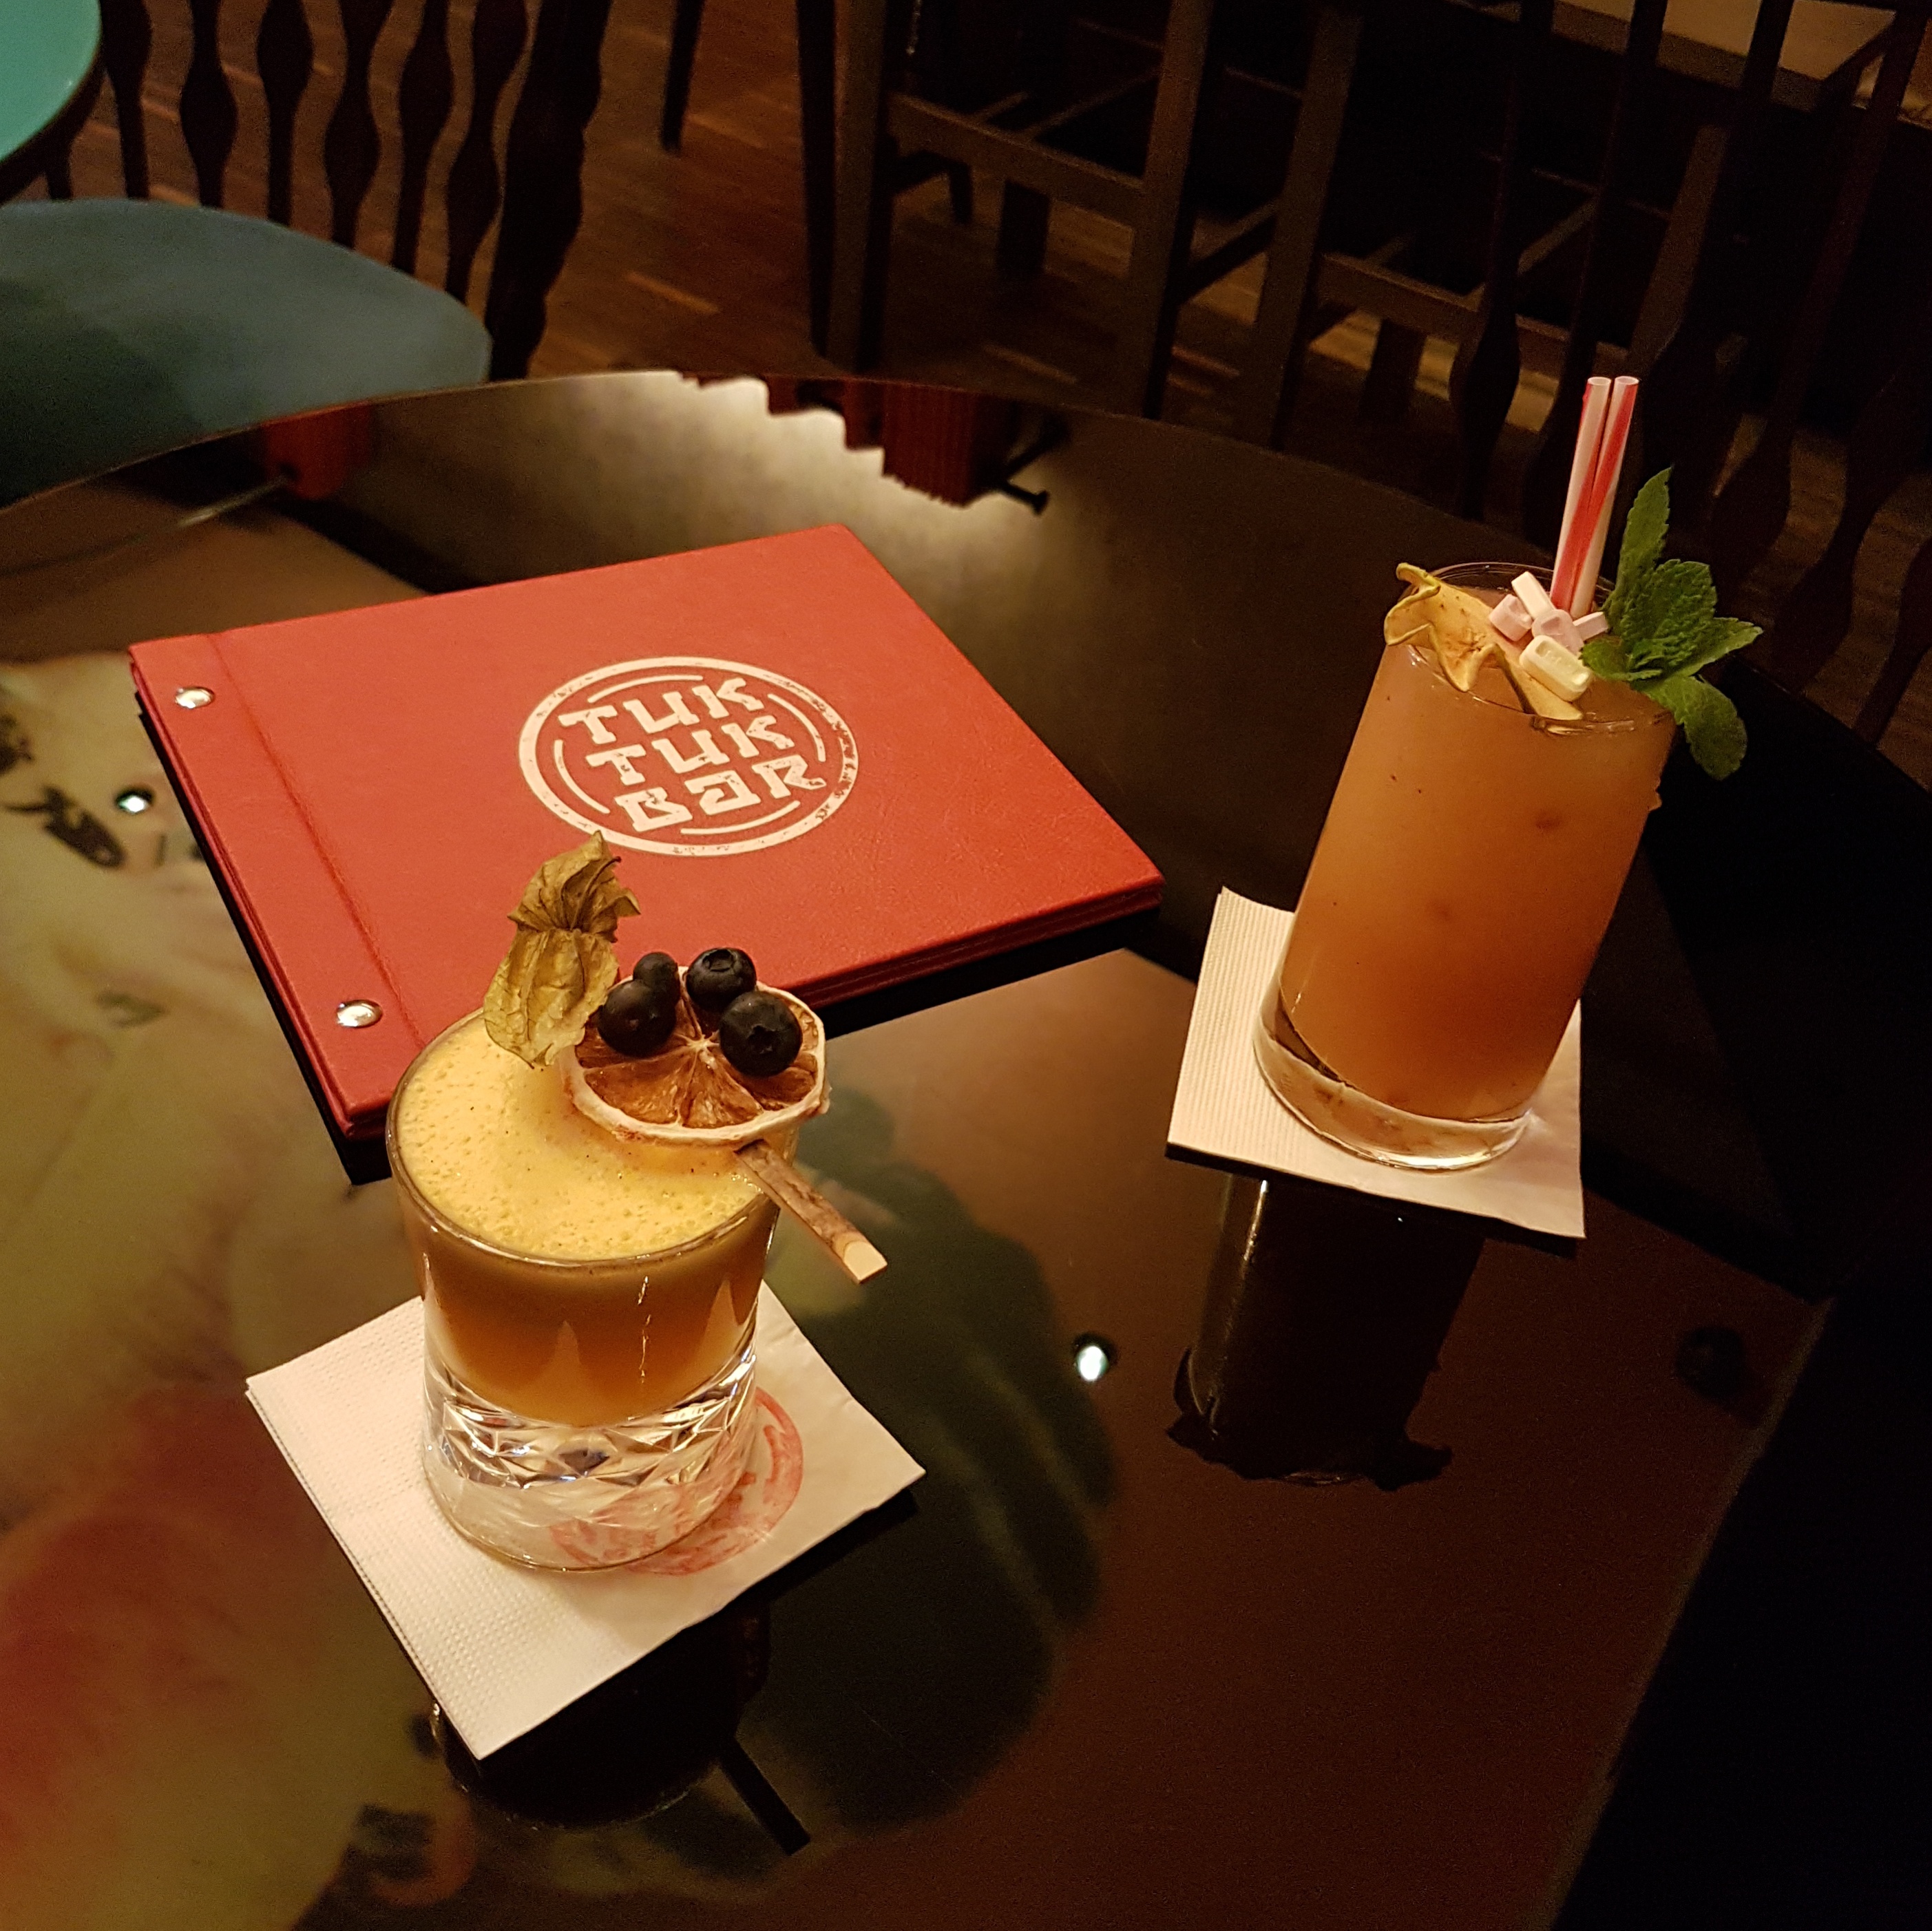 4. Cocktails